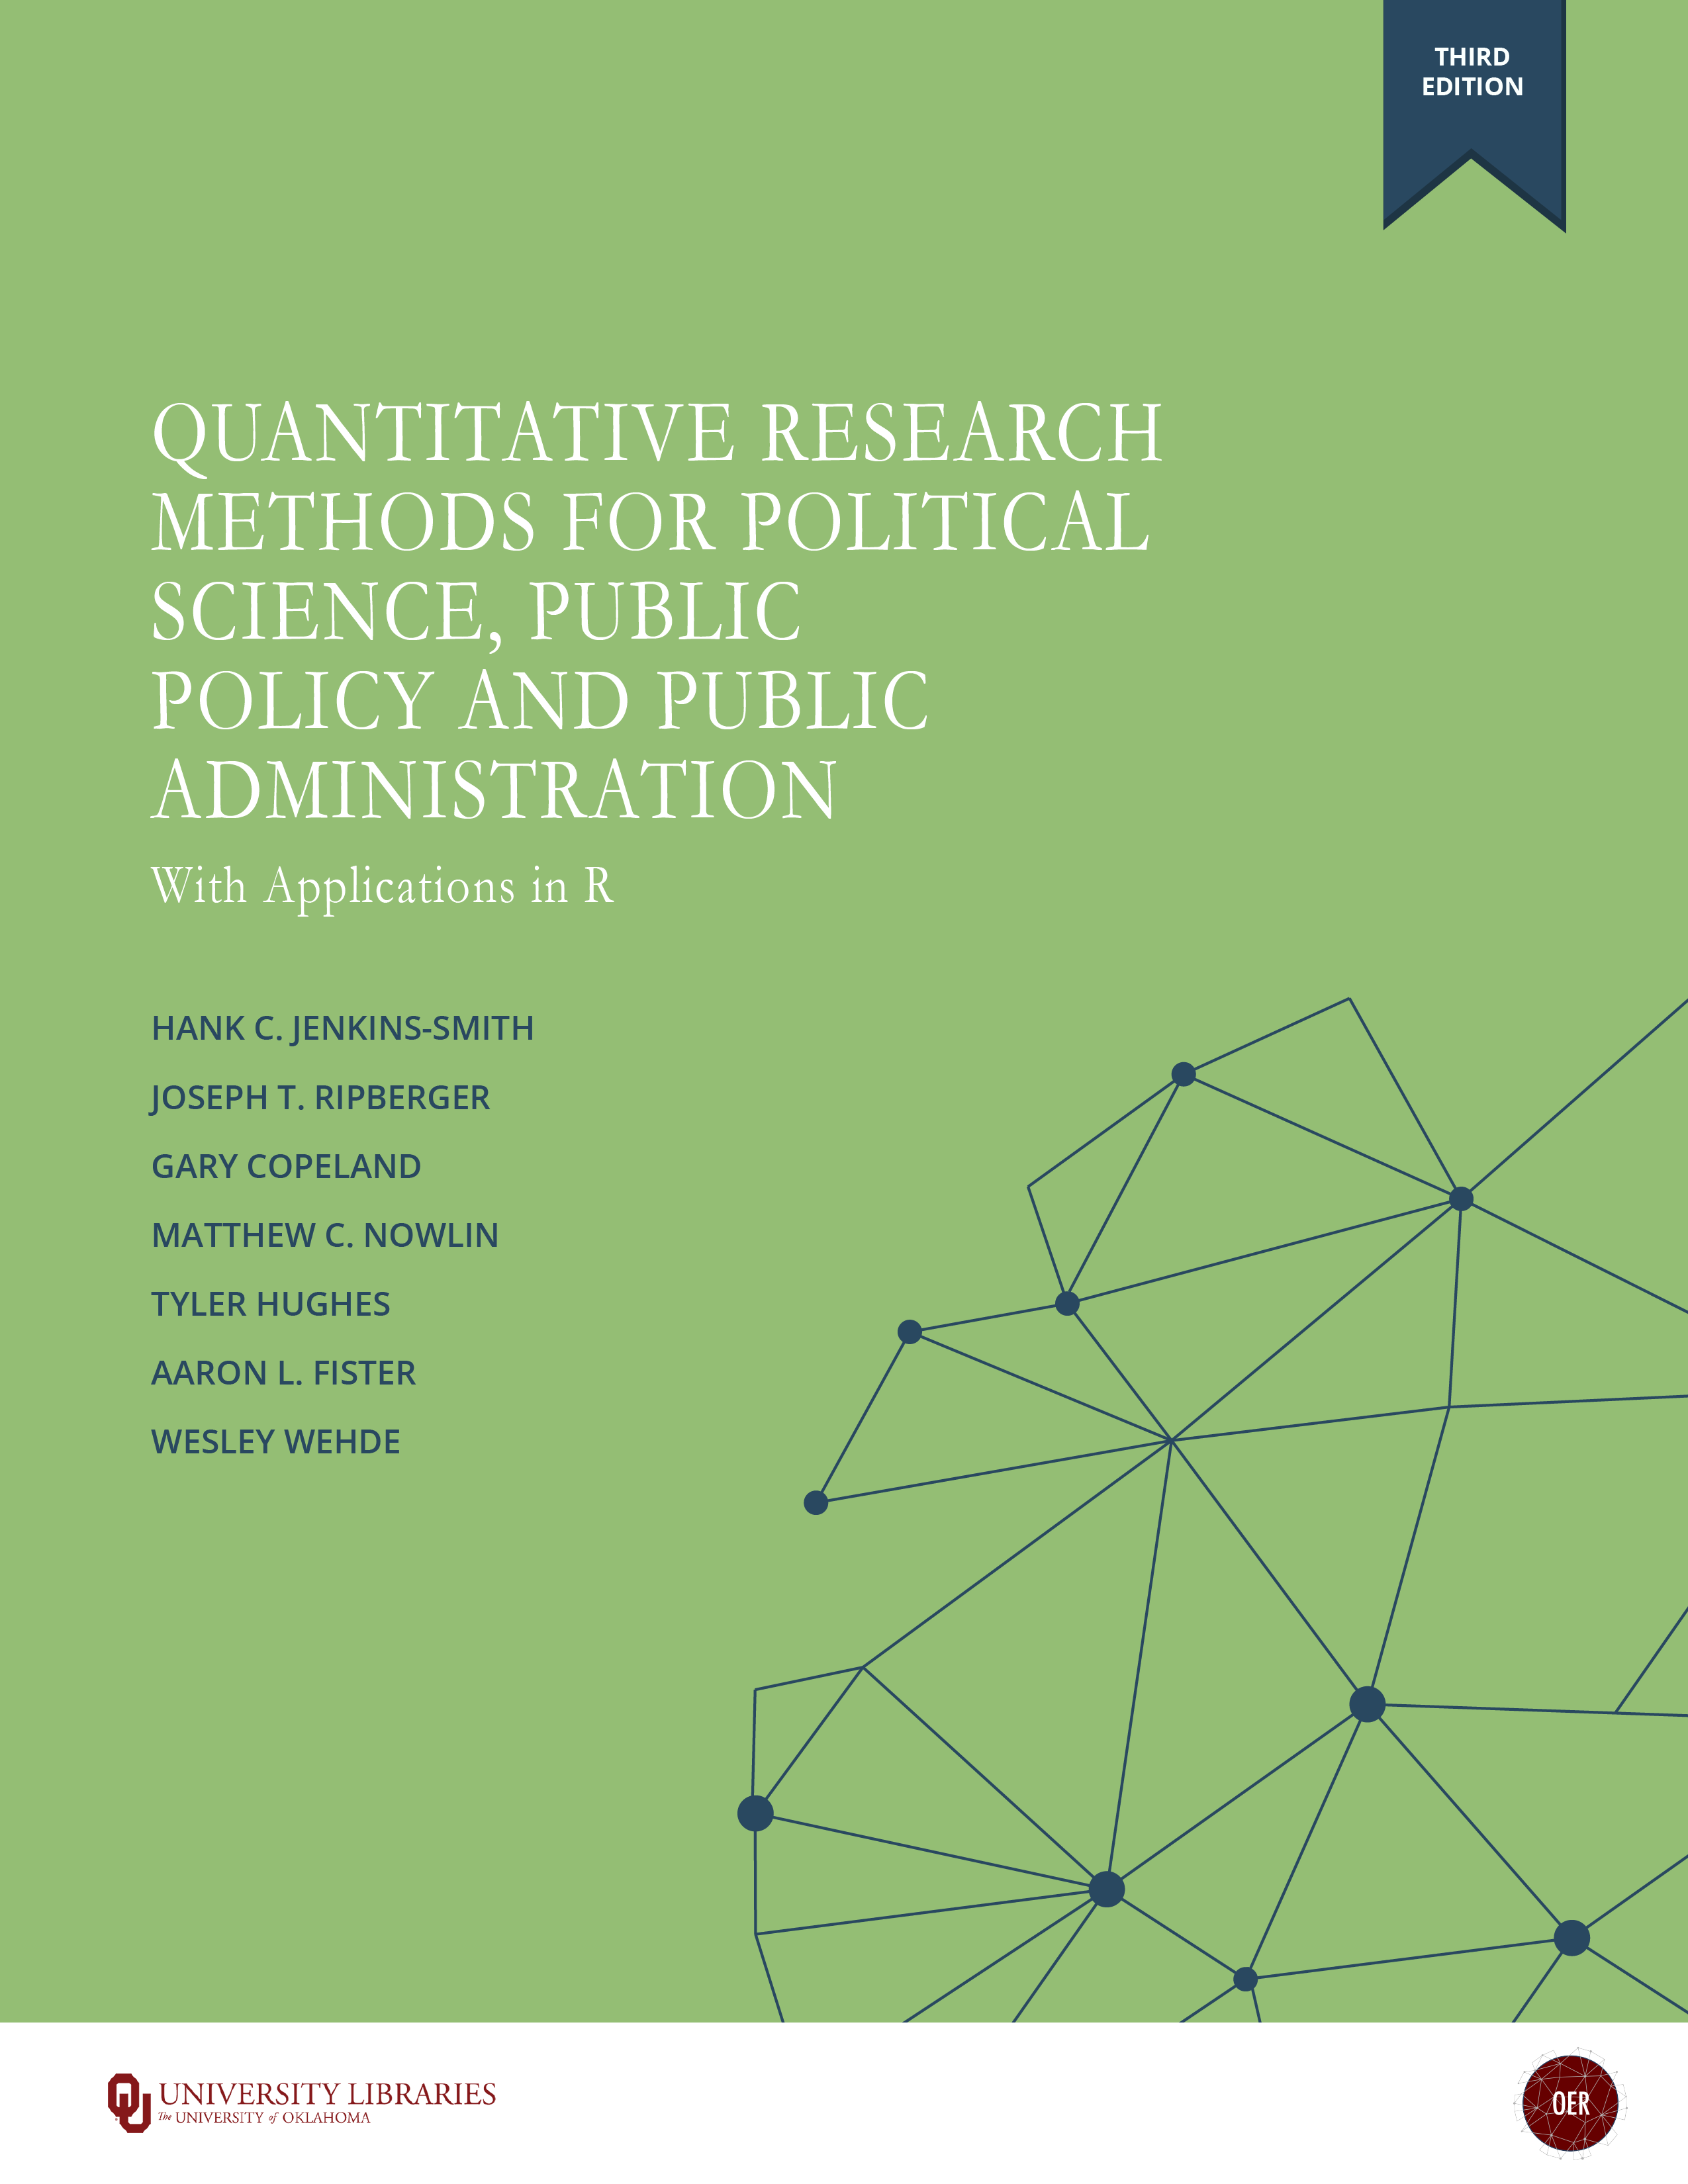 quantitative research definition politics